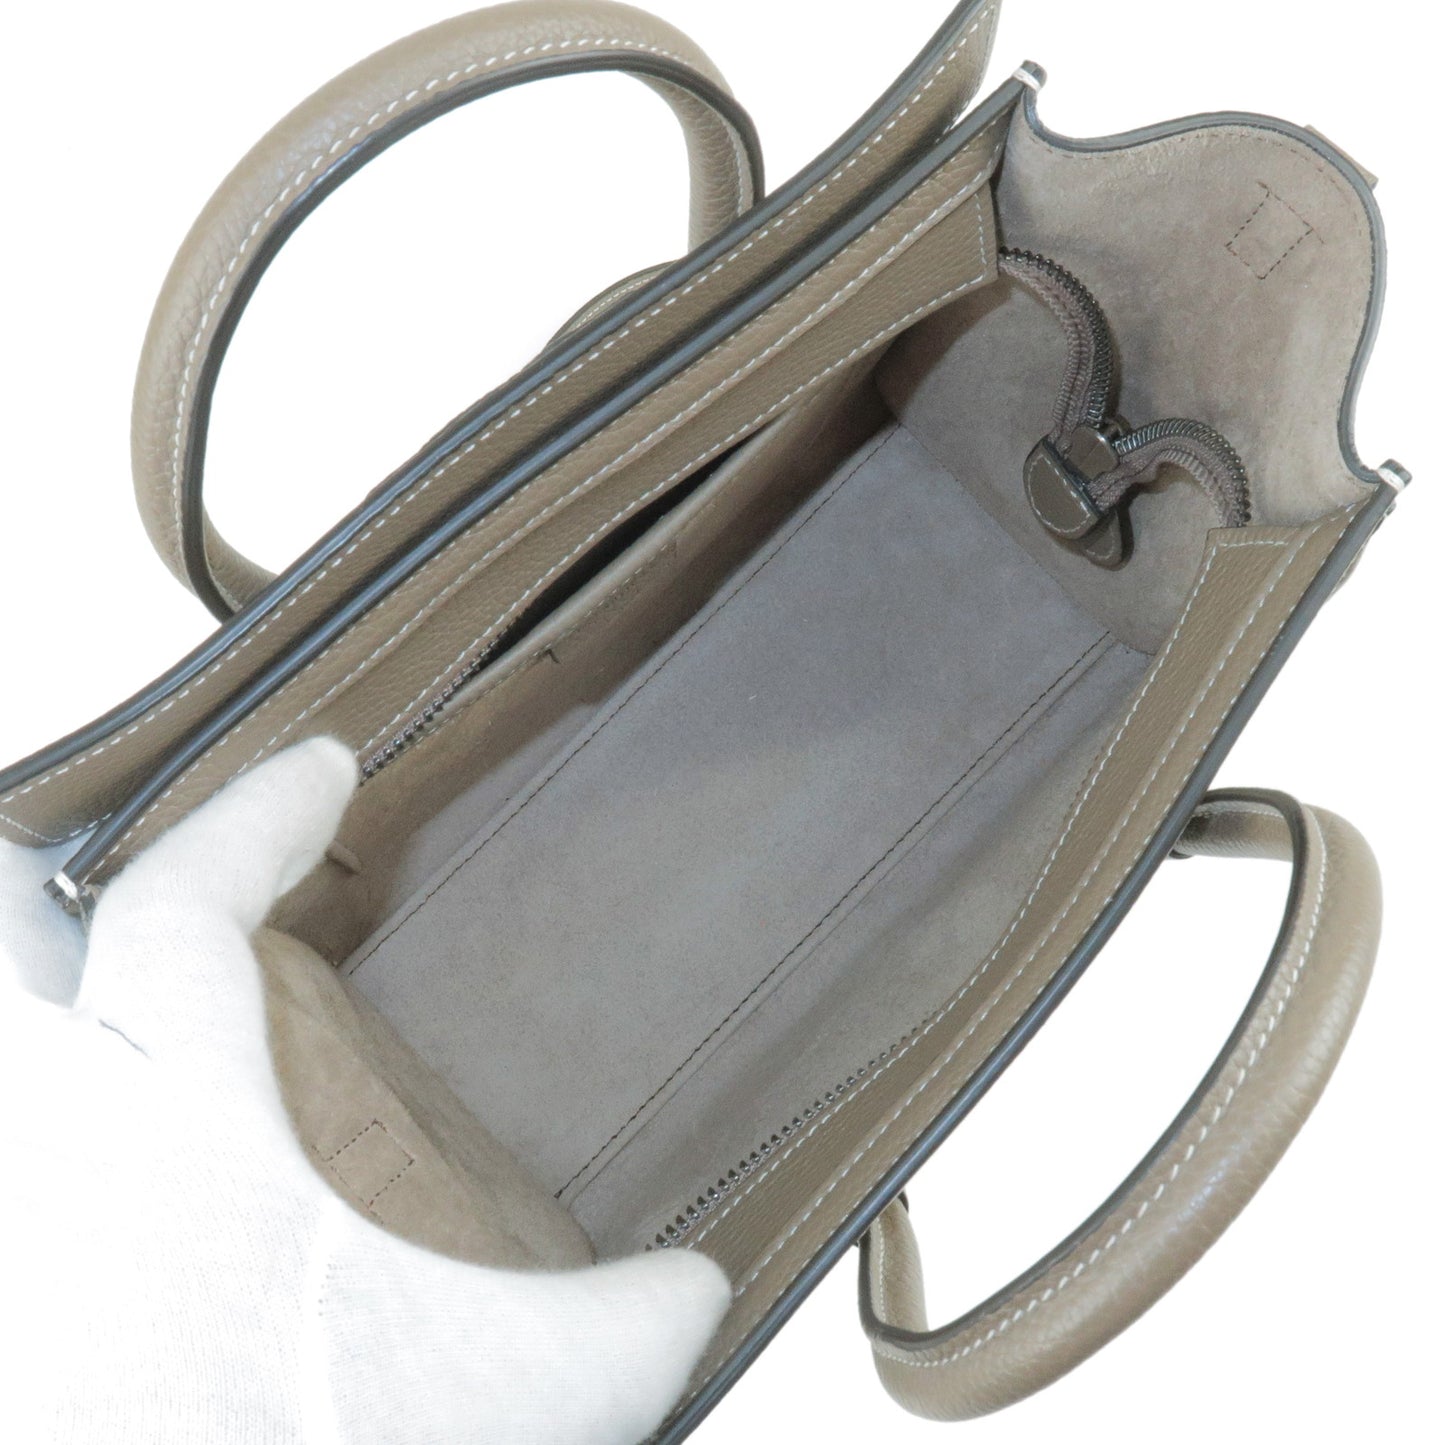 CELINE Leather Luggage Nano Shopper Hand Bag Souris 168243